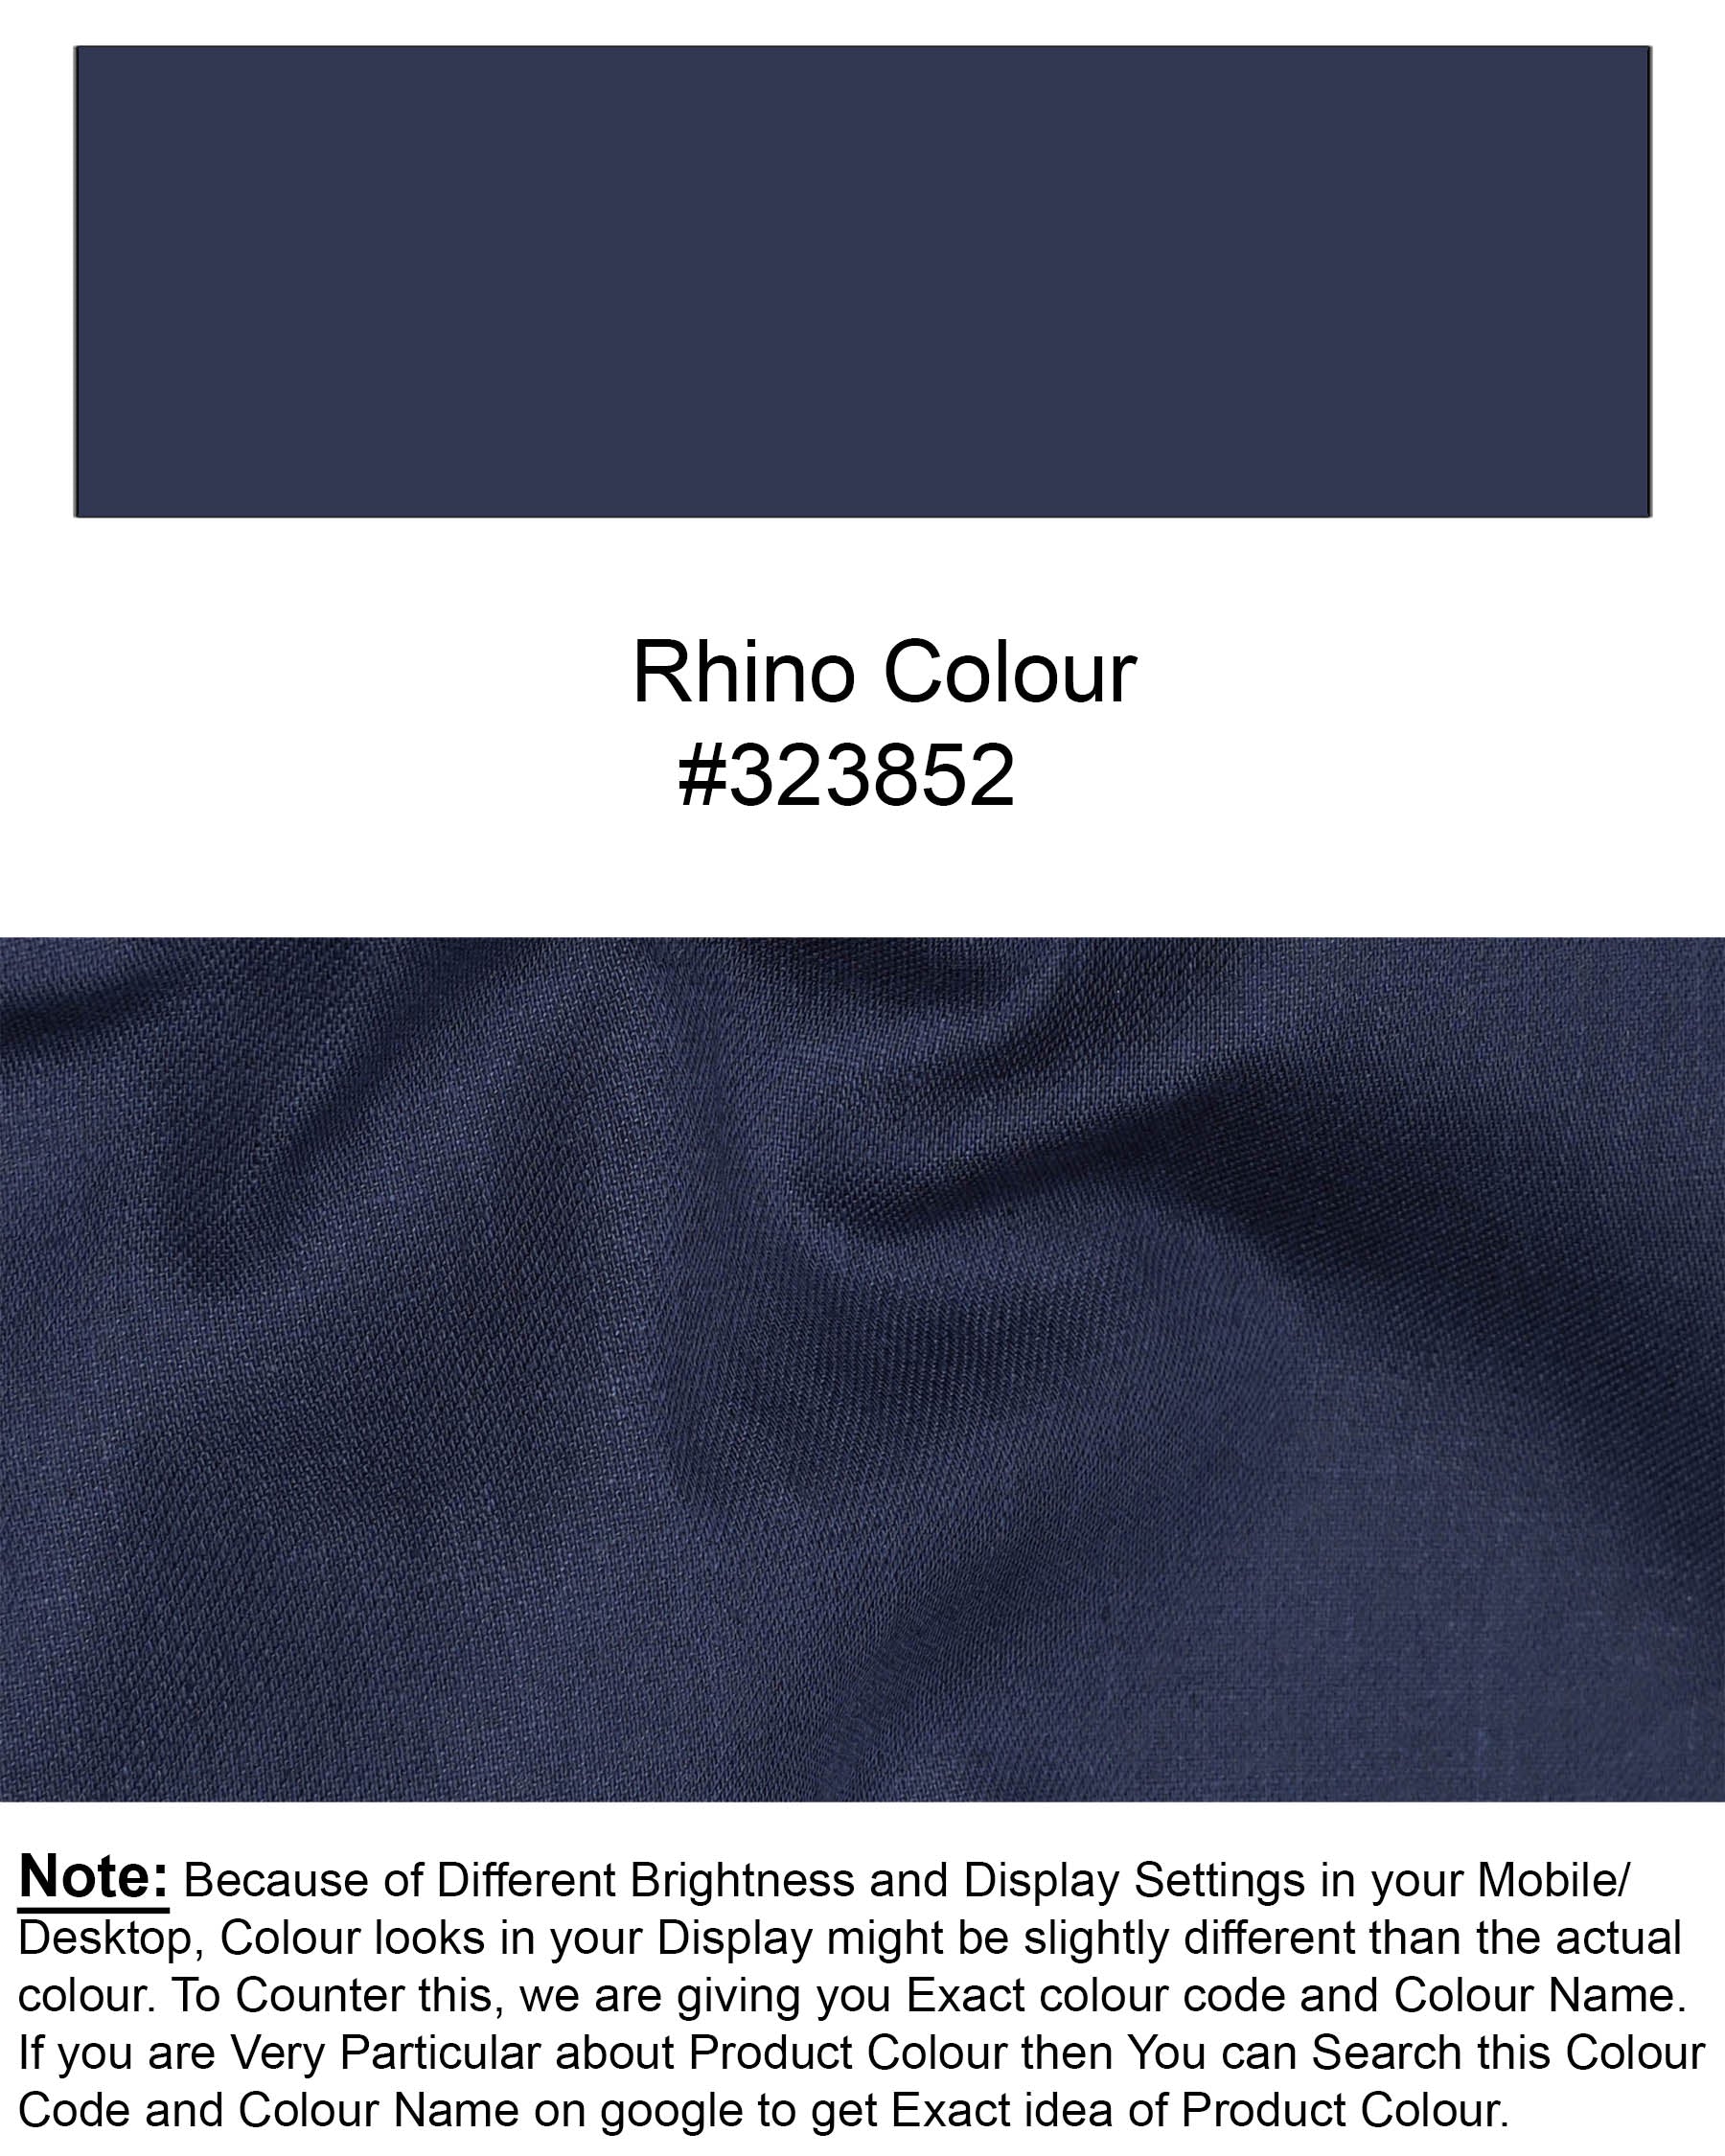 Rhino Blue Luxurious Linen Shirt  7453-M-38, 7453-M-H-38, 7453-M-39, 7453-M-H-39, 7453-M-40, 7453-M-H-40, 7453-M-42, 7453-M-H-42, 7453-M-44, 7453-M-H-44, 7453-M-46, 7453-M-H-46, 7453-M-48, 7453-M-H-48, 7453-M-50, 7453-M-H-50, 7453-M-52, 7453-M-H-52